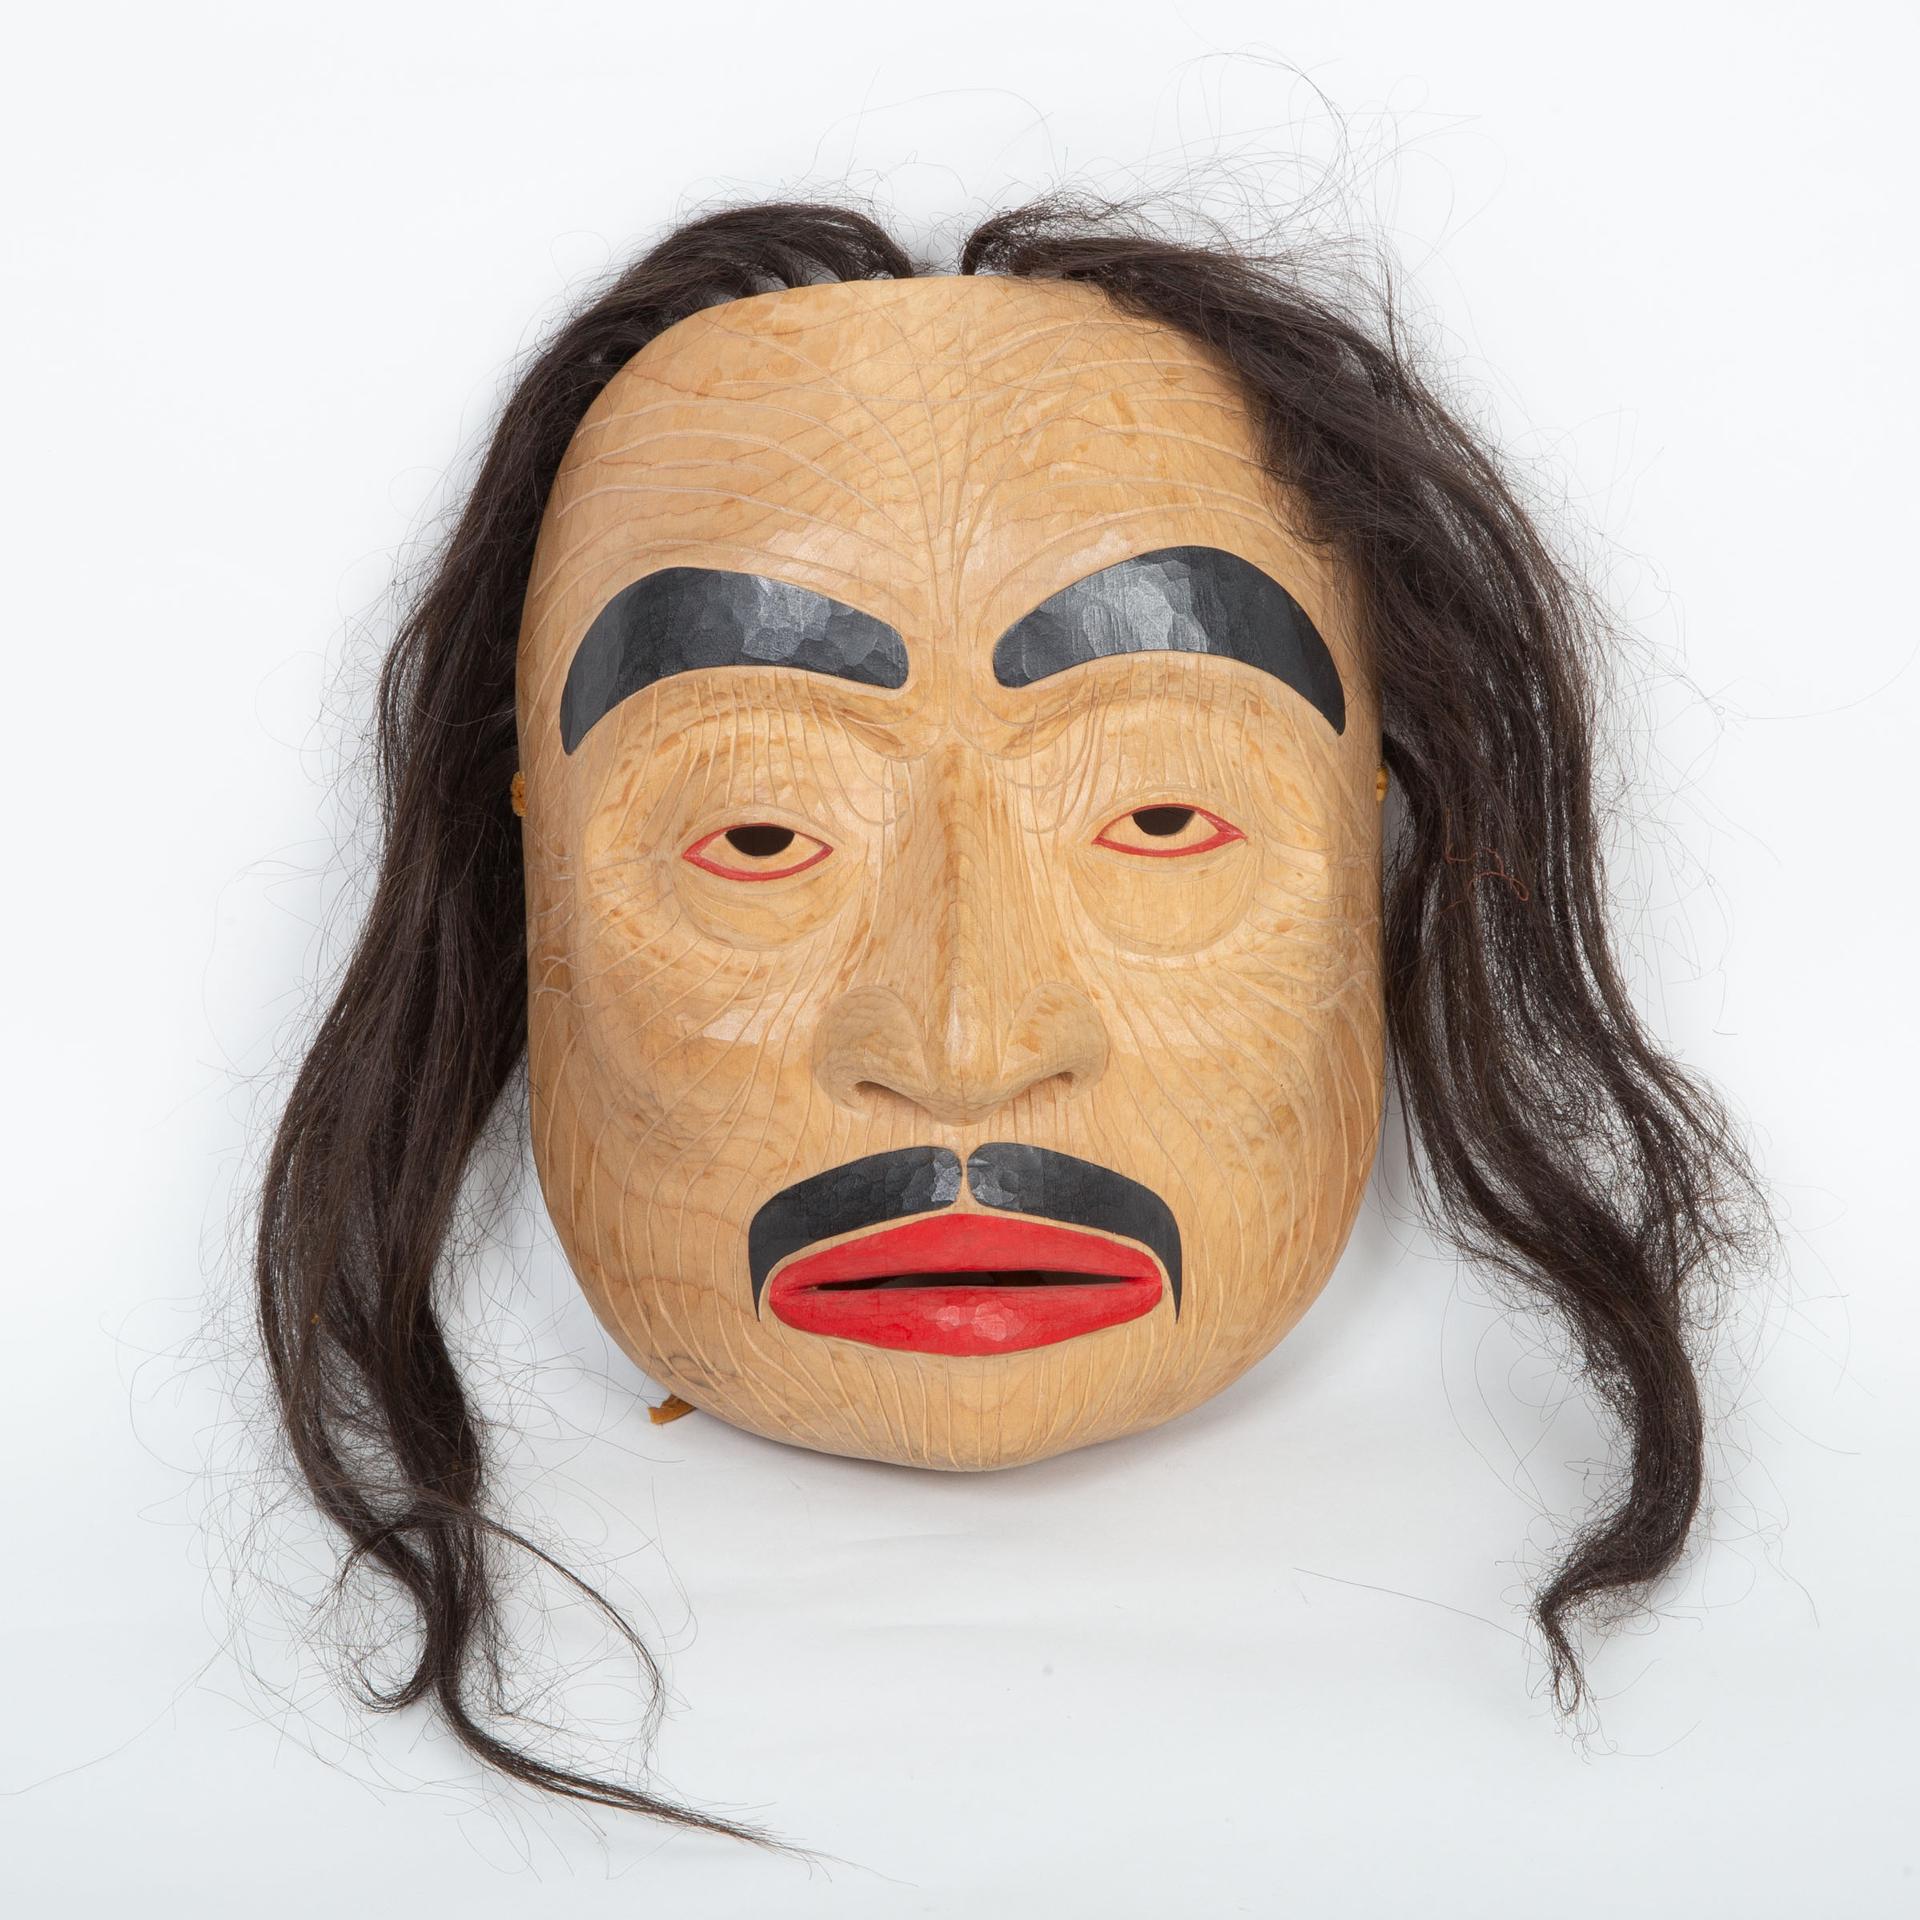 Glen Rabena (1953) - Human Face Mask